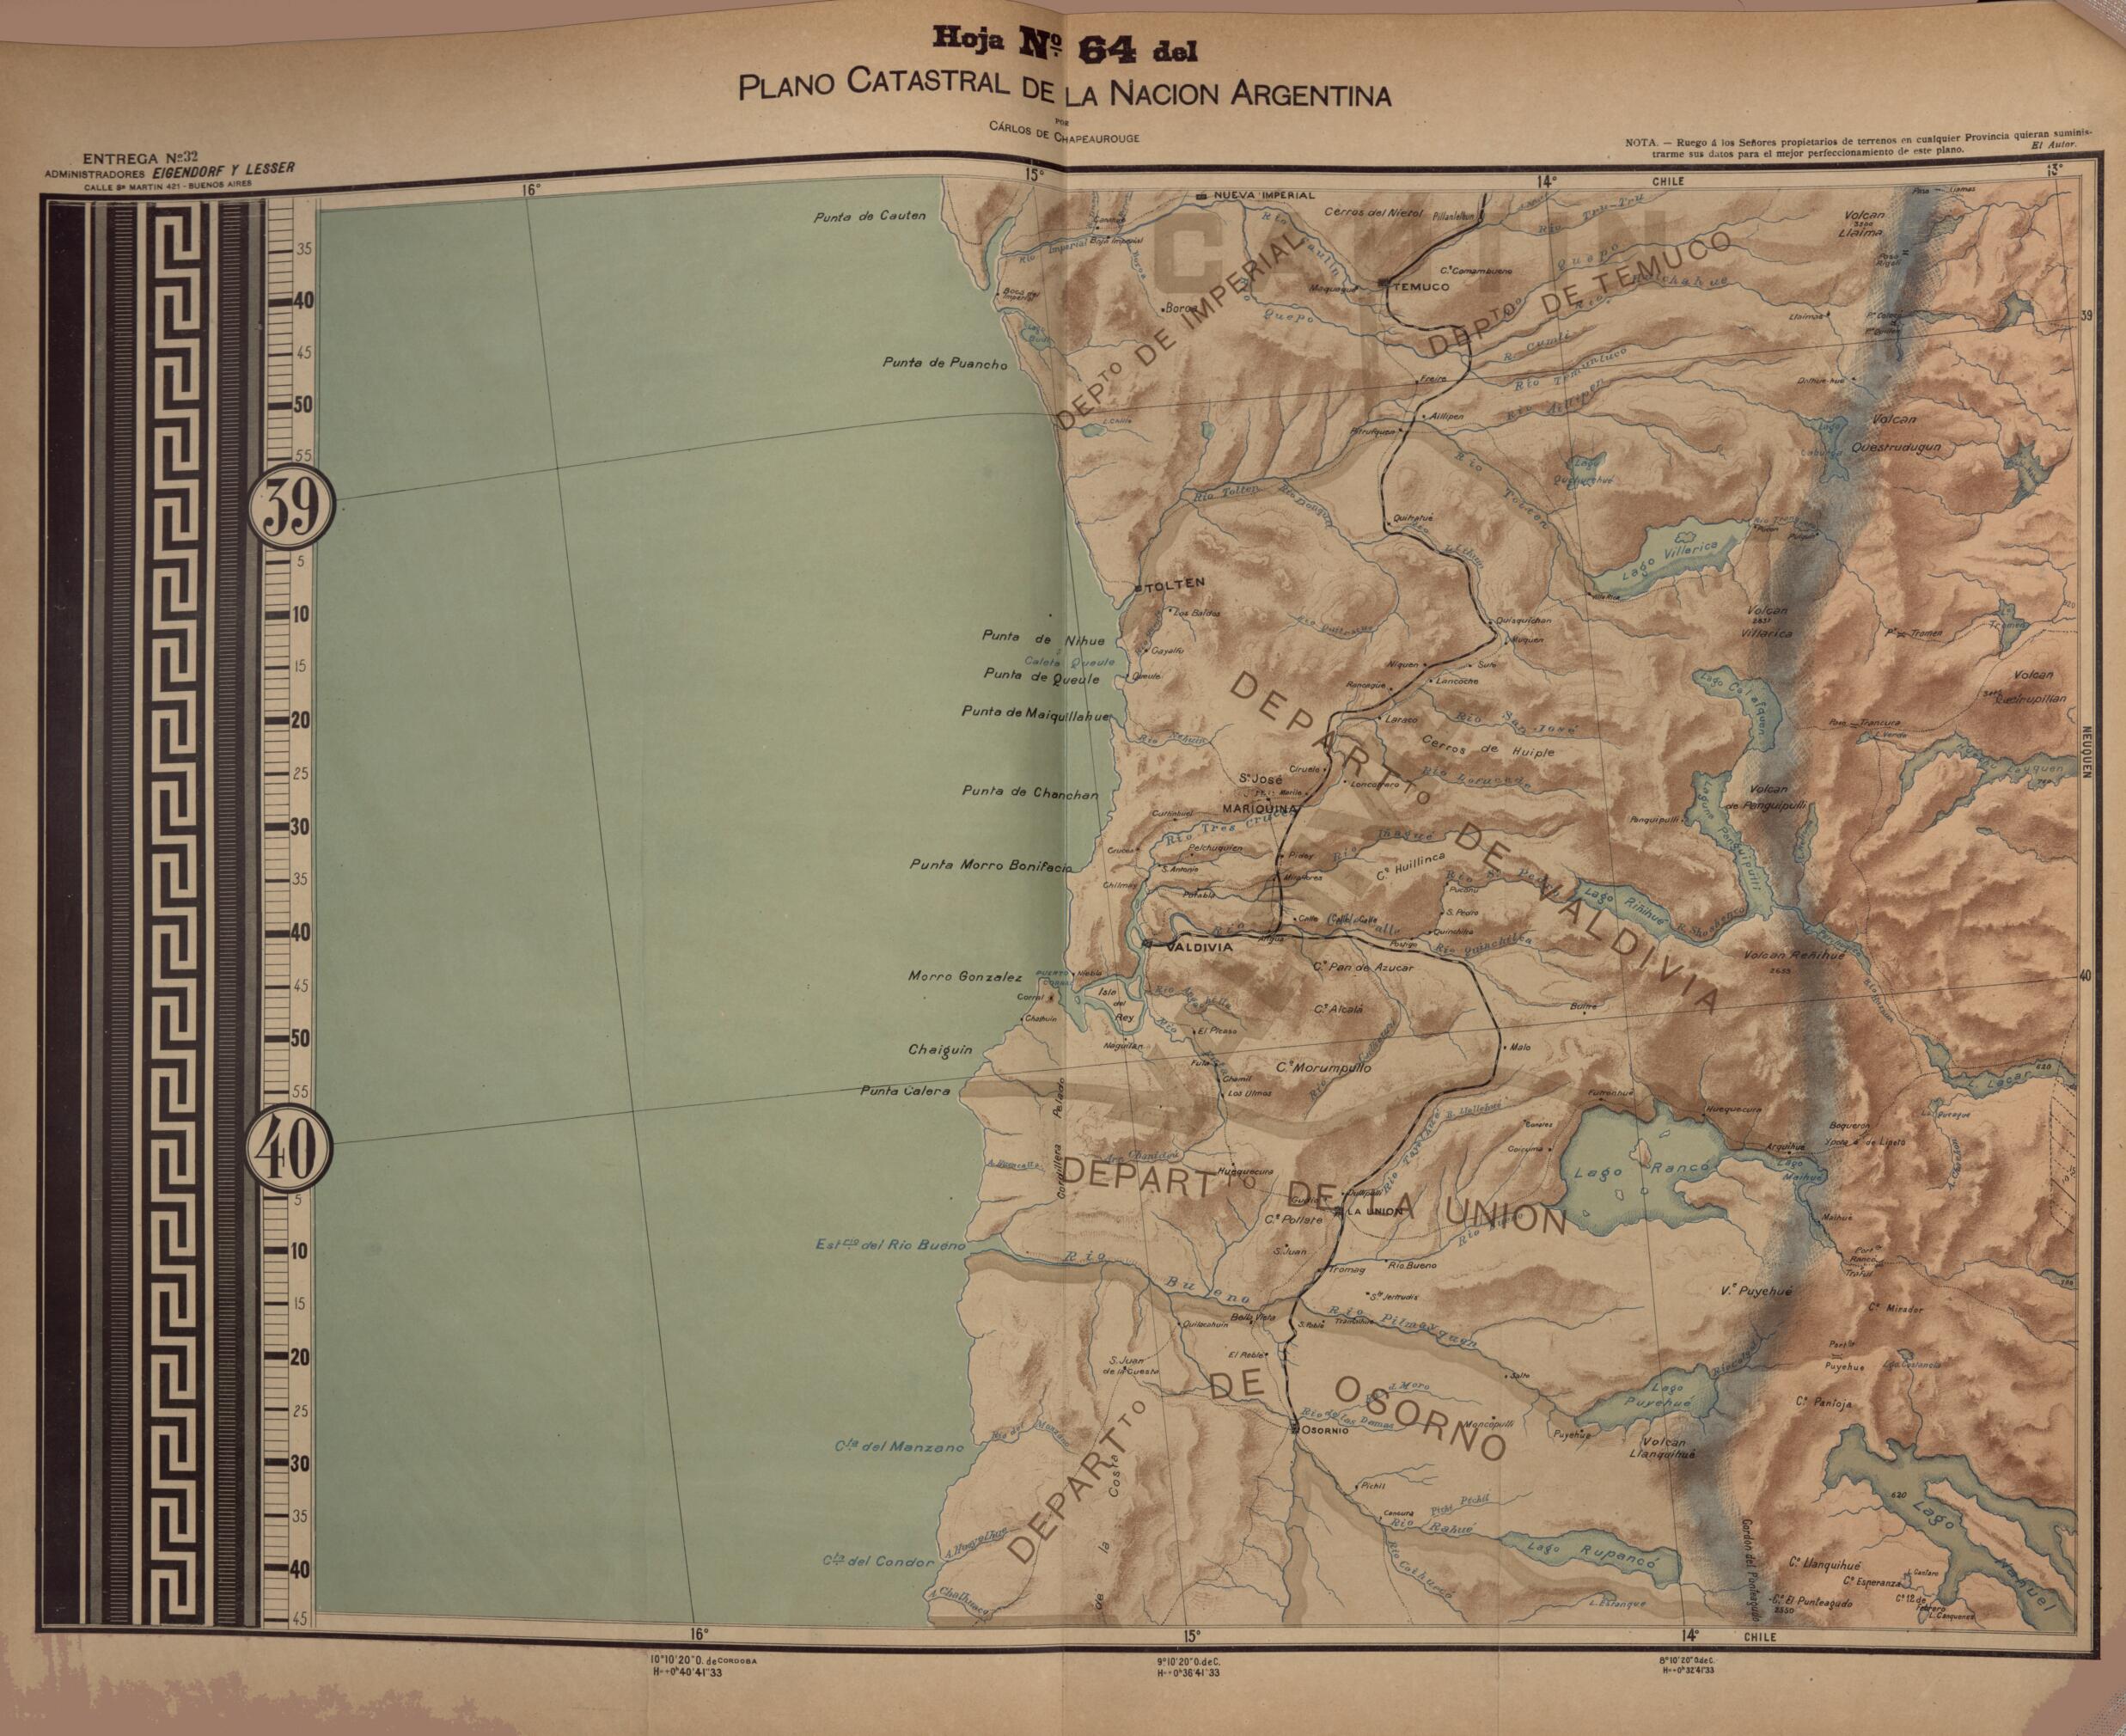 This old map of Plano Catastral De La Nacion Hoja No. 64 from República Argentina from 1905 was created by Carlos De Chapeaurouge in 1905